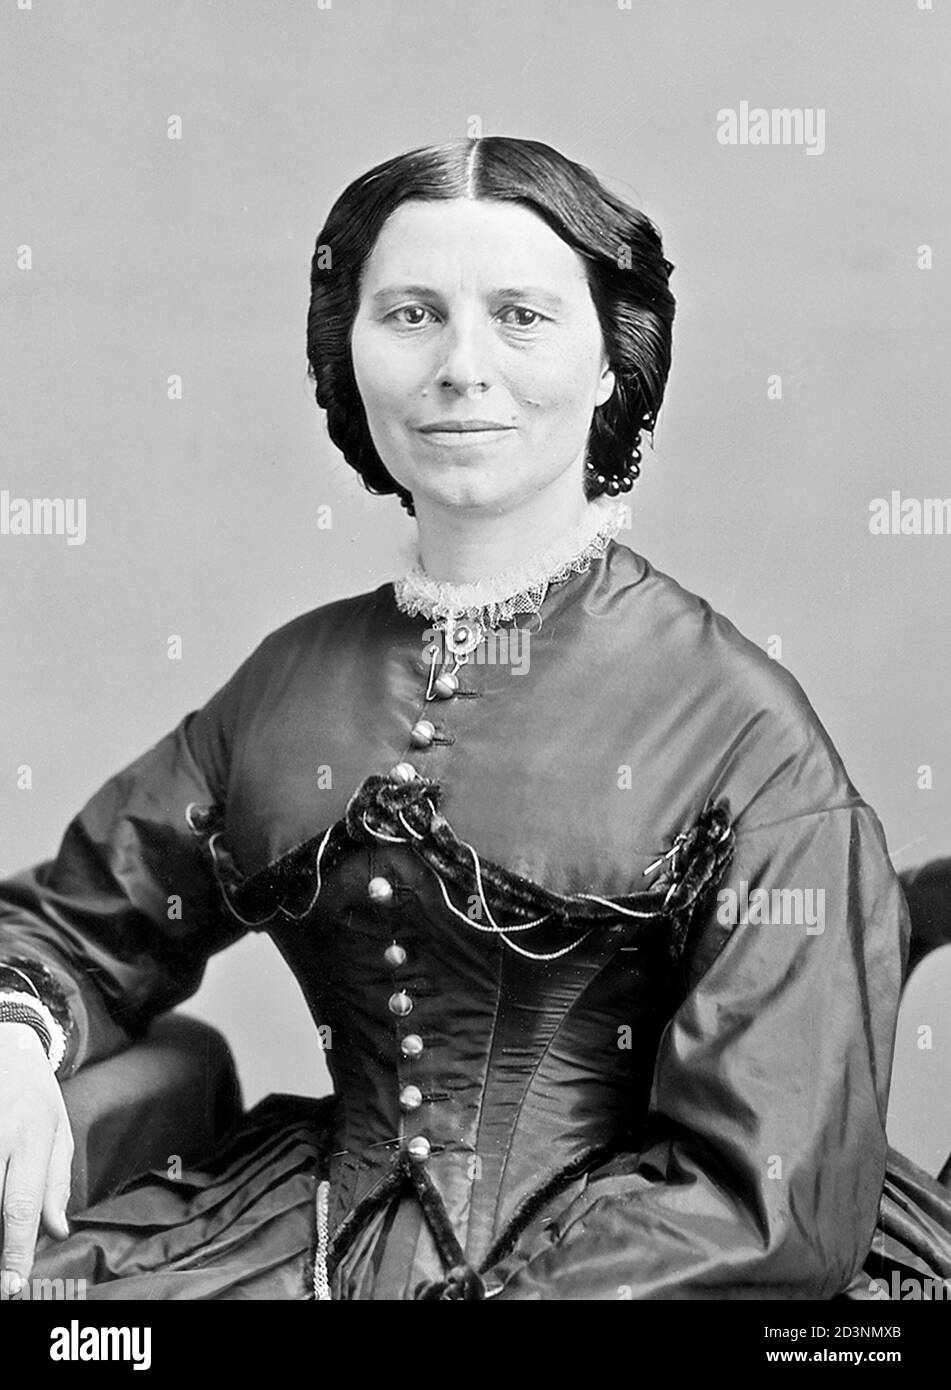 Clara Barton. Portrait of the nurse and founder of the American Red Cross, Clarissa 'Clara' Harlowe Barton (1821-1912), by Matthew Brady, c.1865. Stock Photo